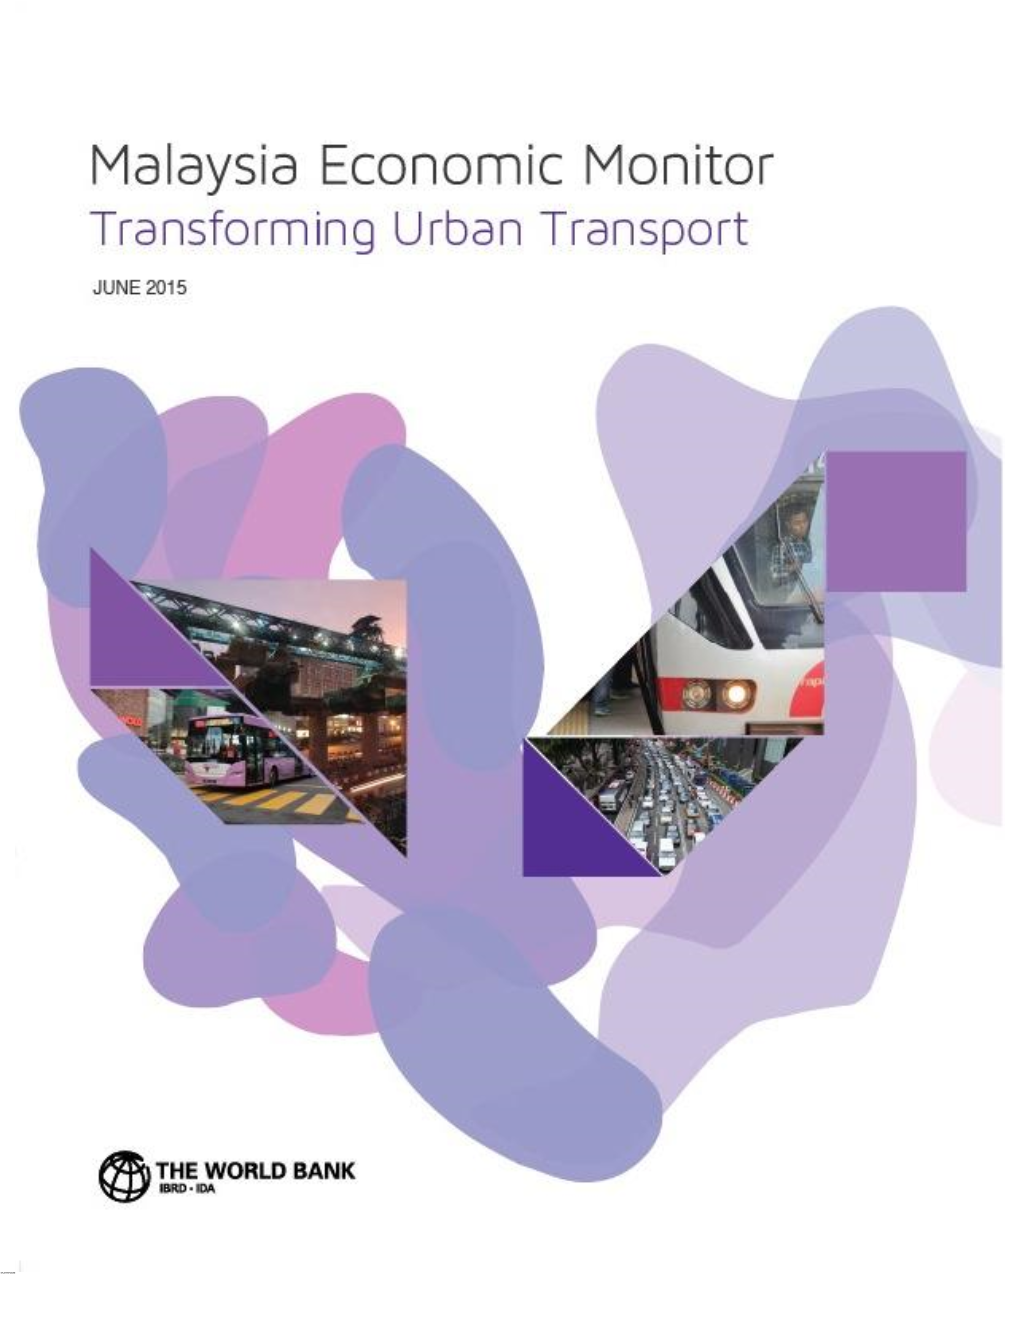 Malaysia Economic Monitor June 2015 Transforming Urban Transport